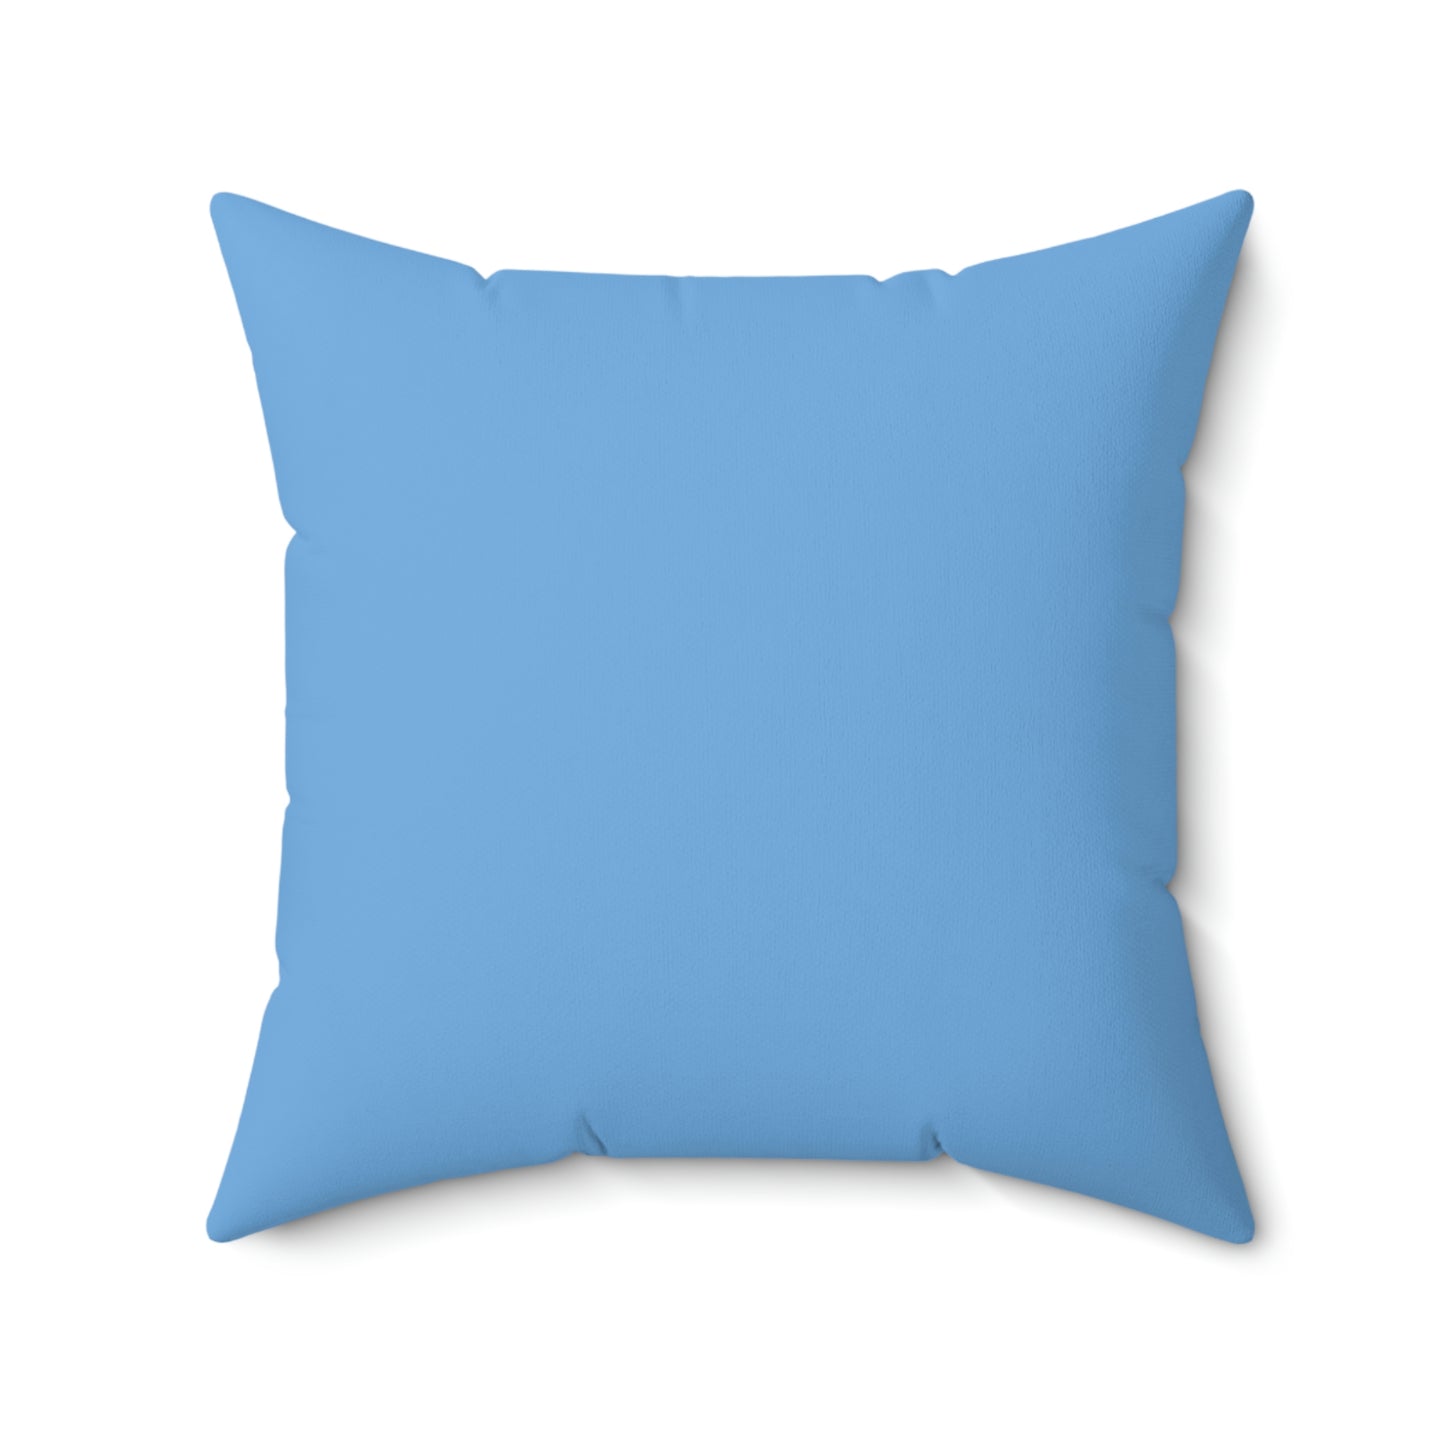 Spun Polyester Square Pillow Case “Pooh Line on Light Blue”